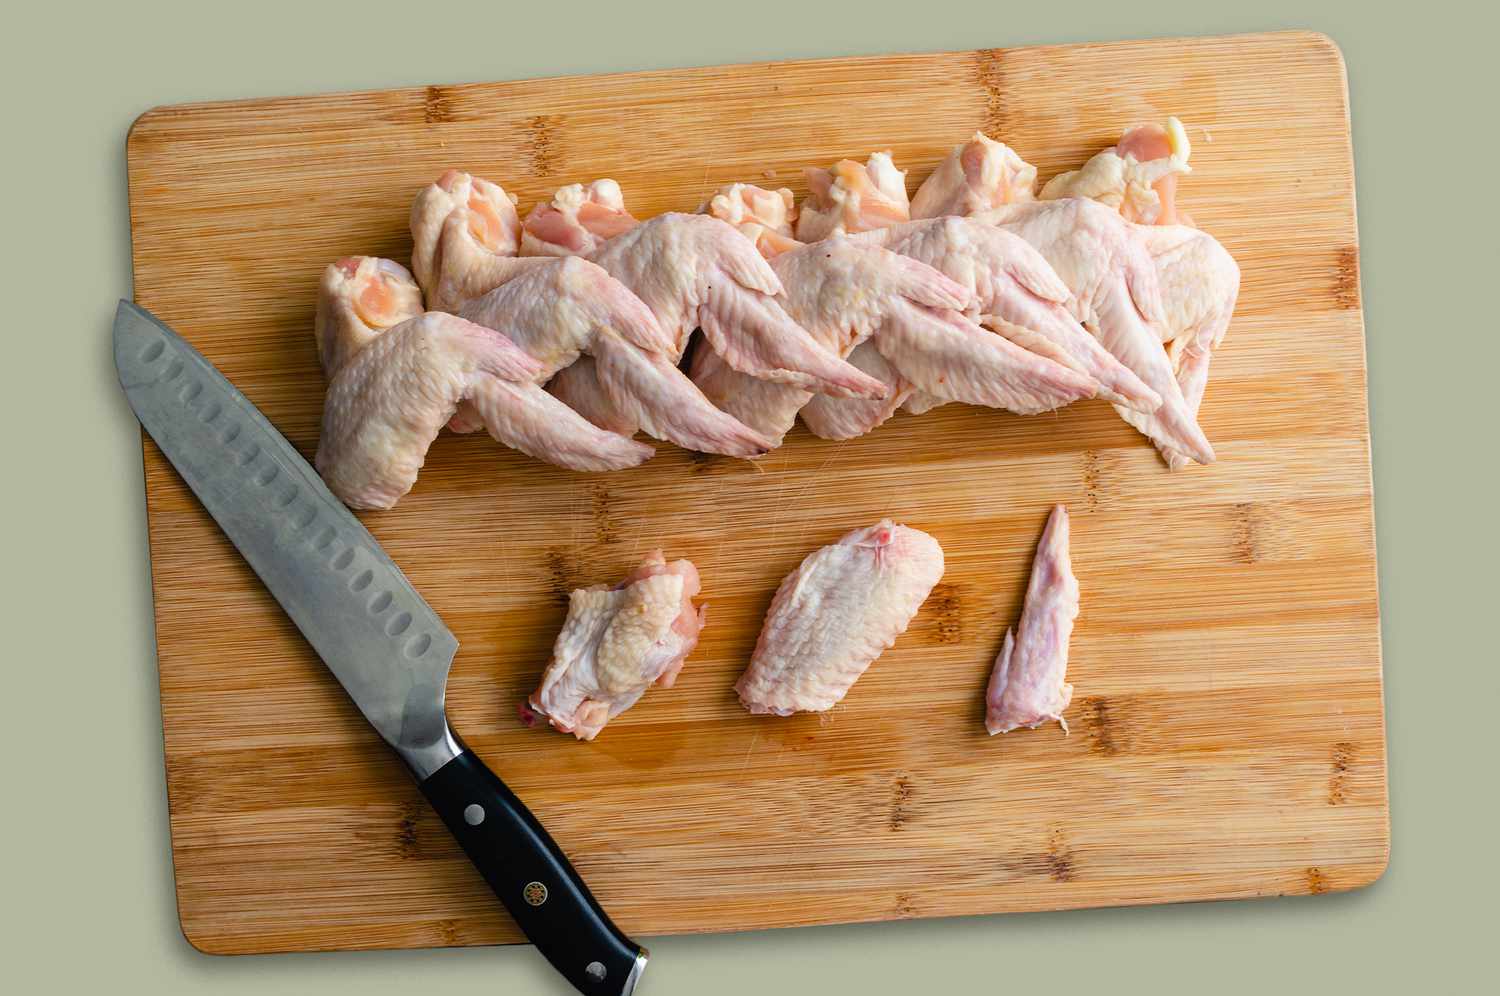 Raw chicken wings on cutting board